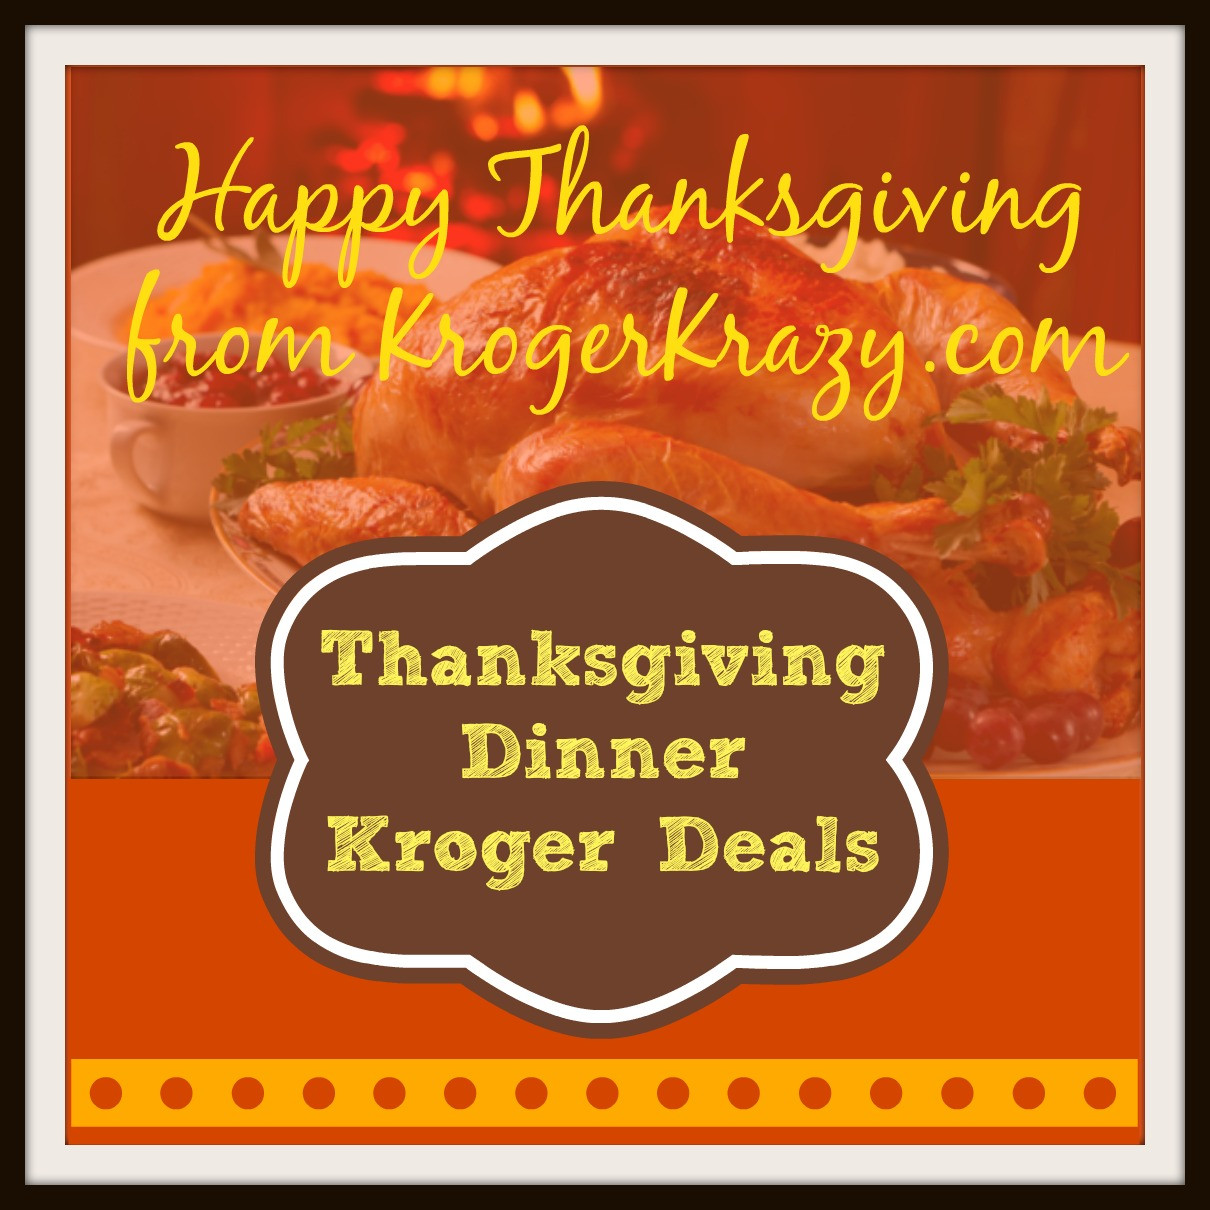 Kroger Thanksgiving Dinner
 Roundup of Thanksgiving Dinner Essentials at Kroger